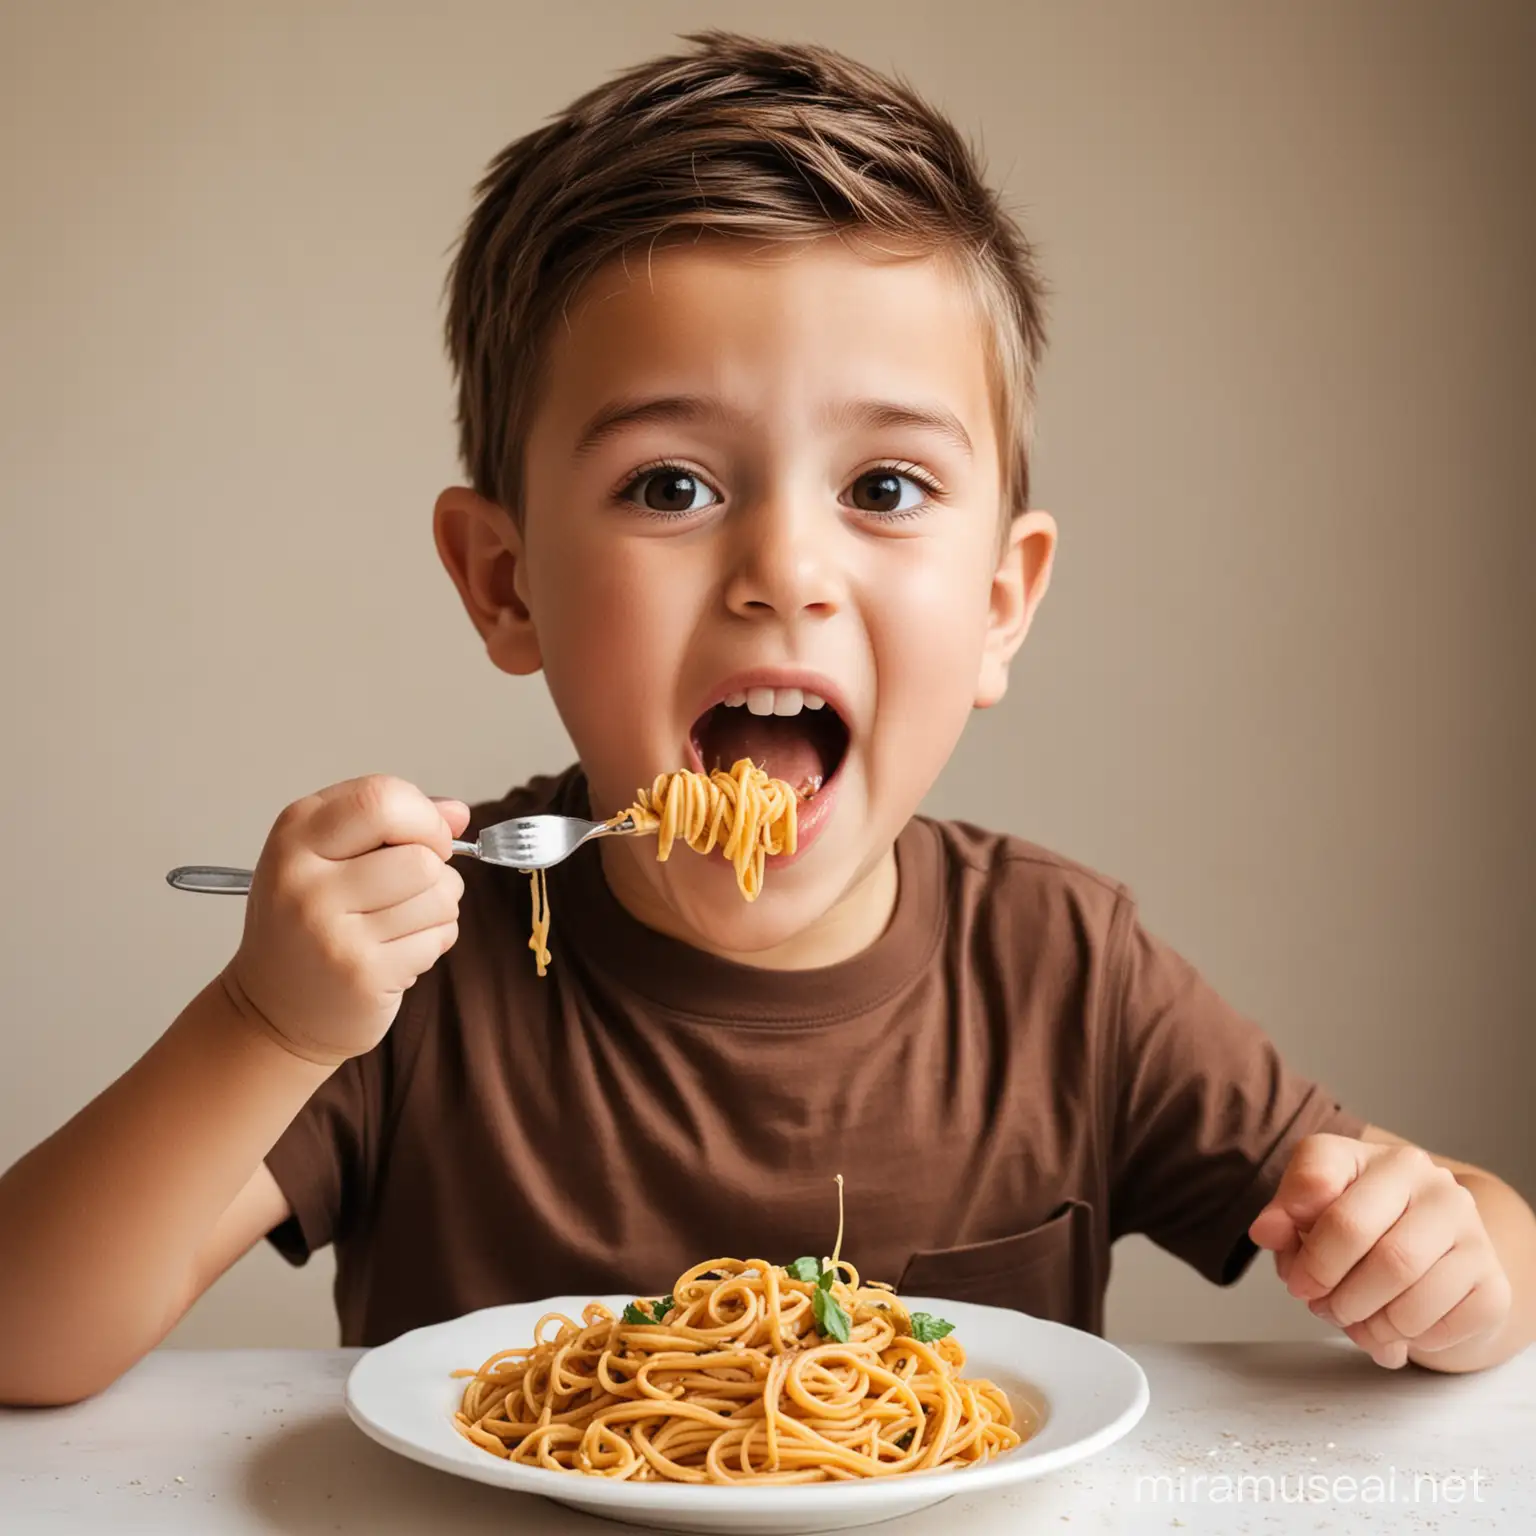 Young Boy Enjoying Delicious Pasta in Casual Attire